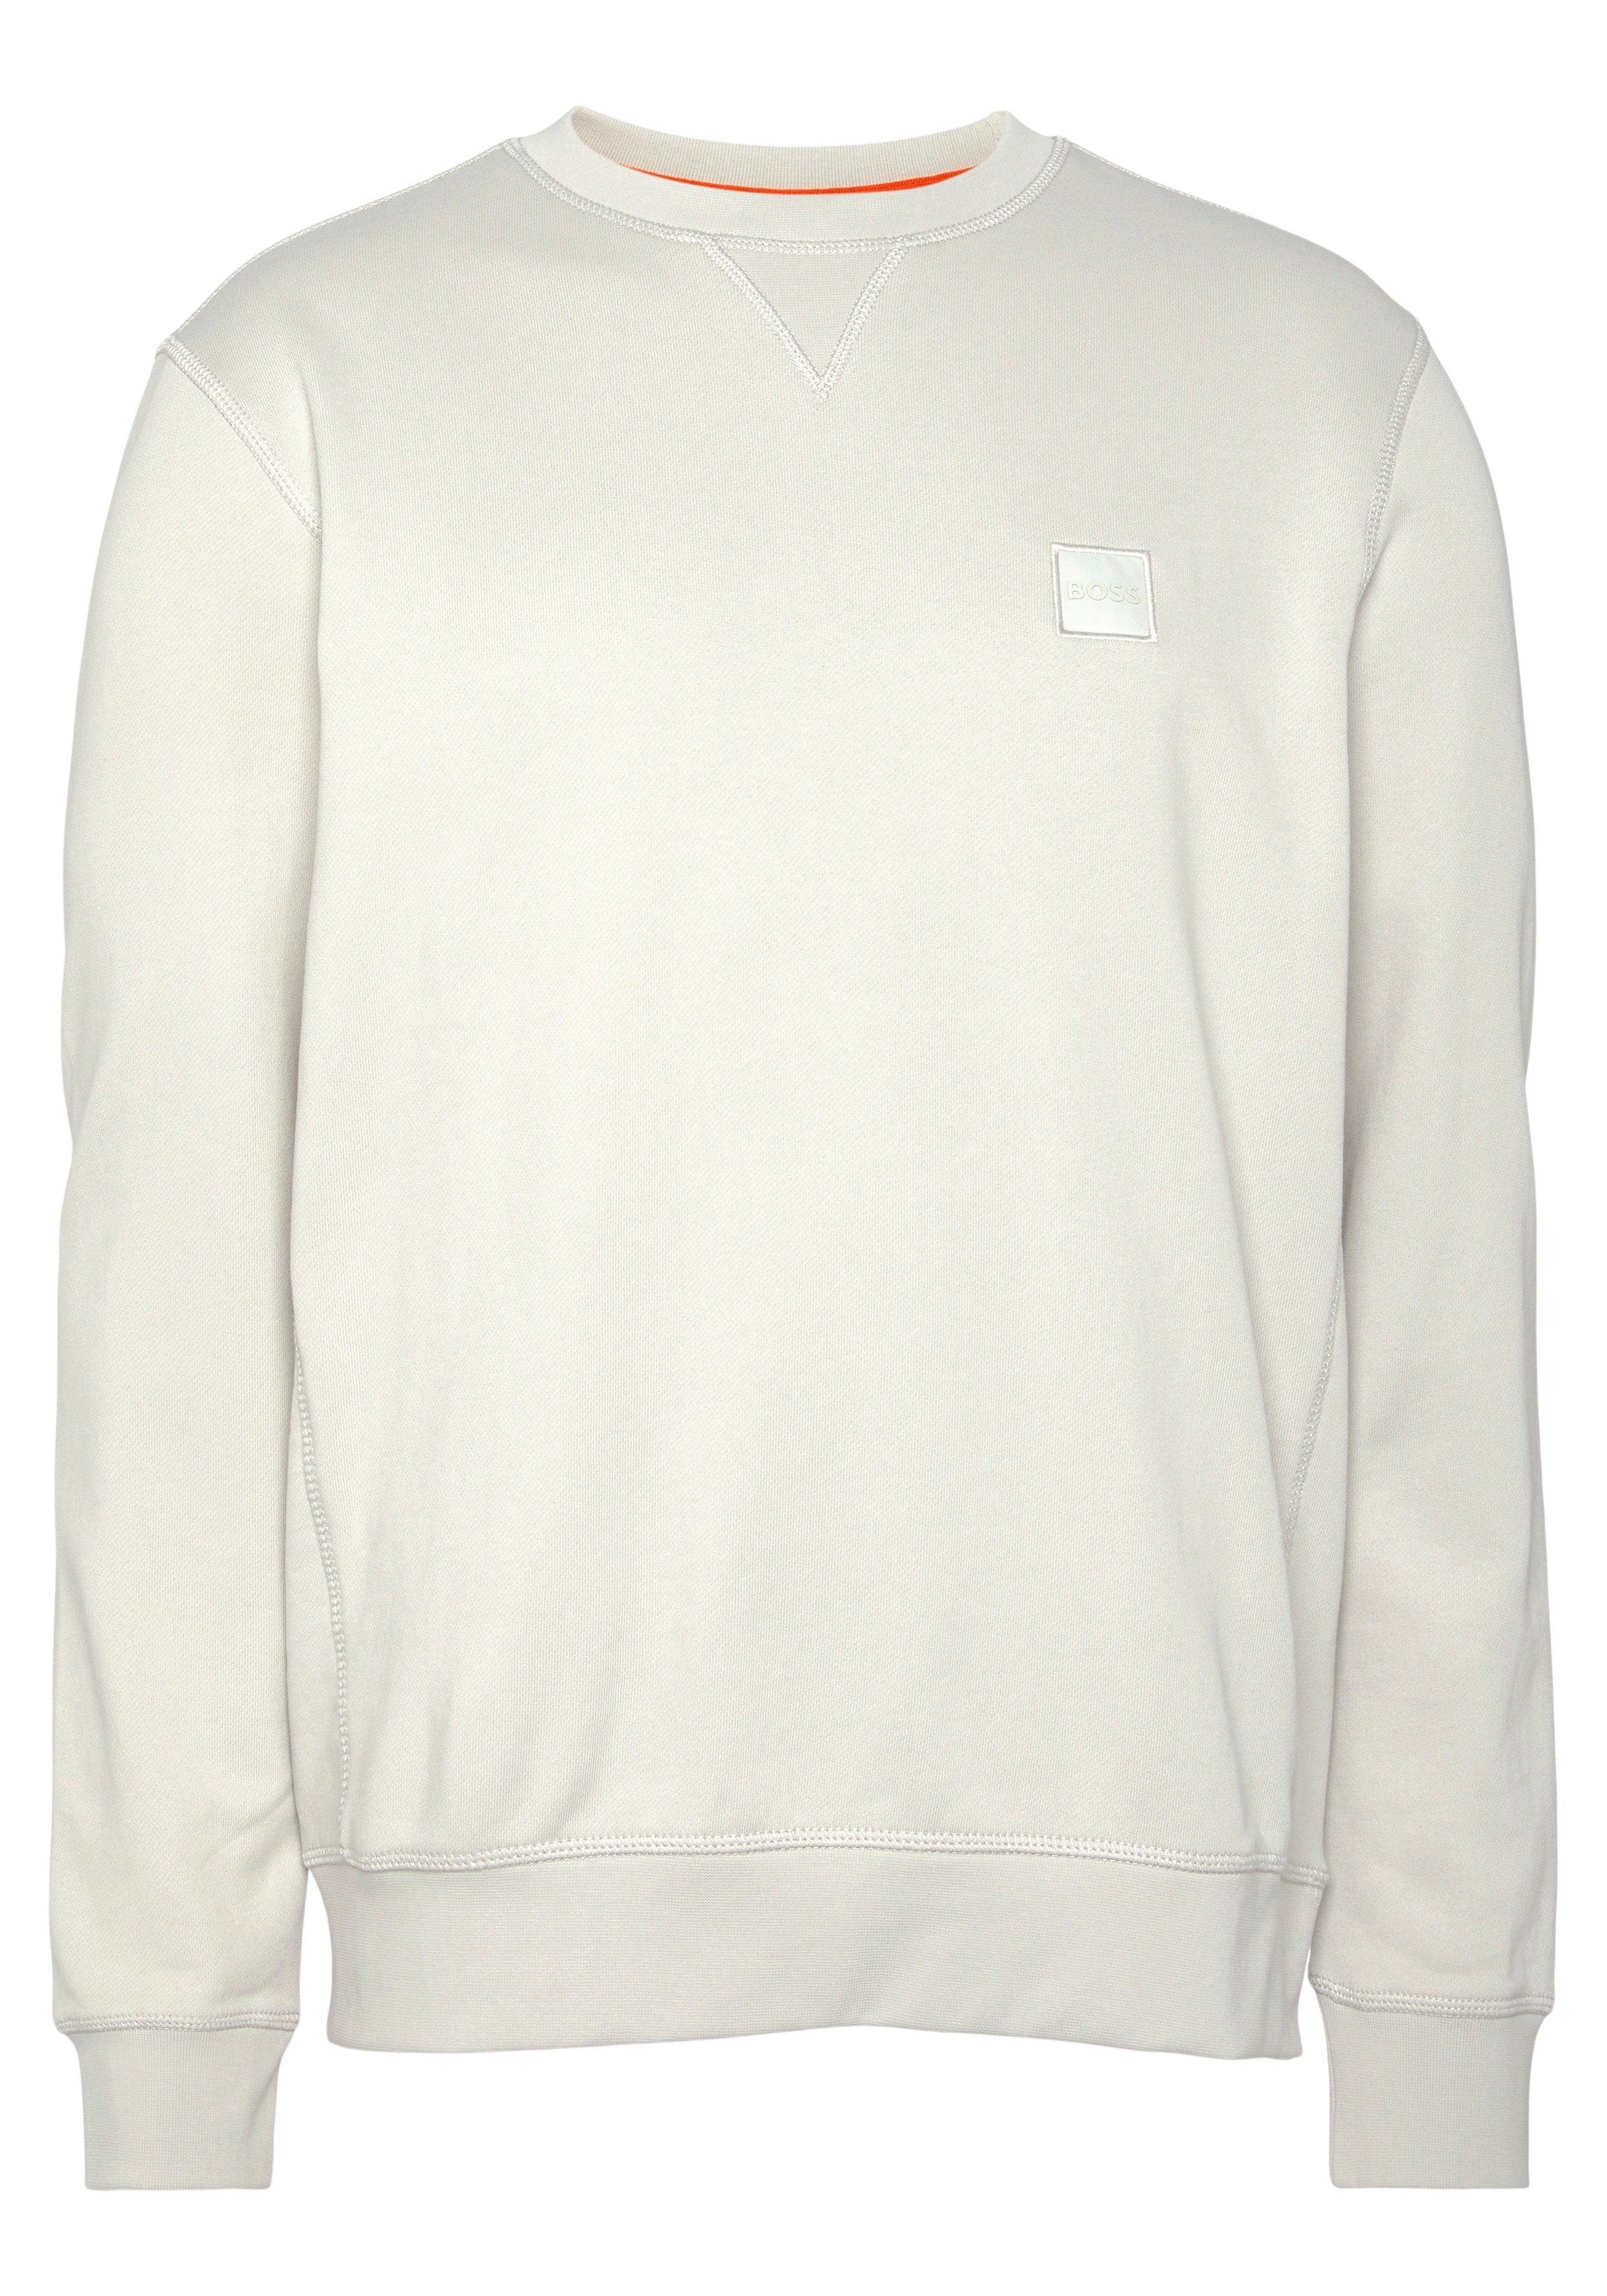 BOSS ORANGE BOSS aufgesticktem Grey057 mit Sweatshirt Logo Westart Light/Pastel